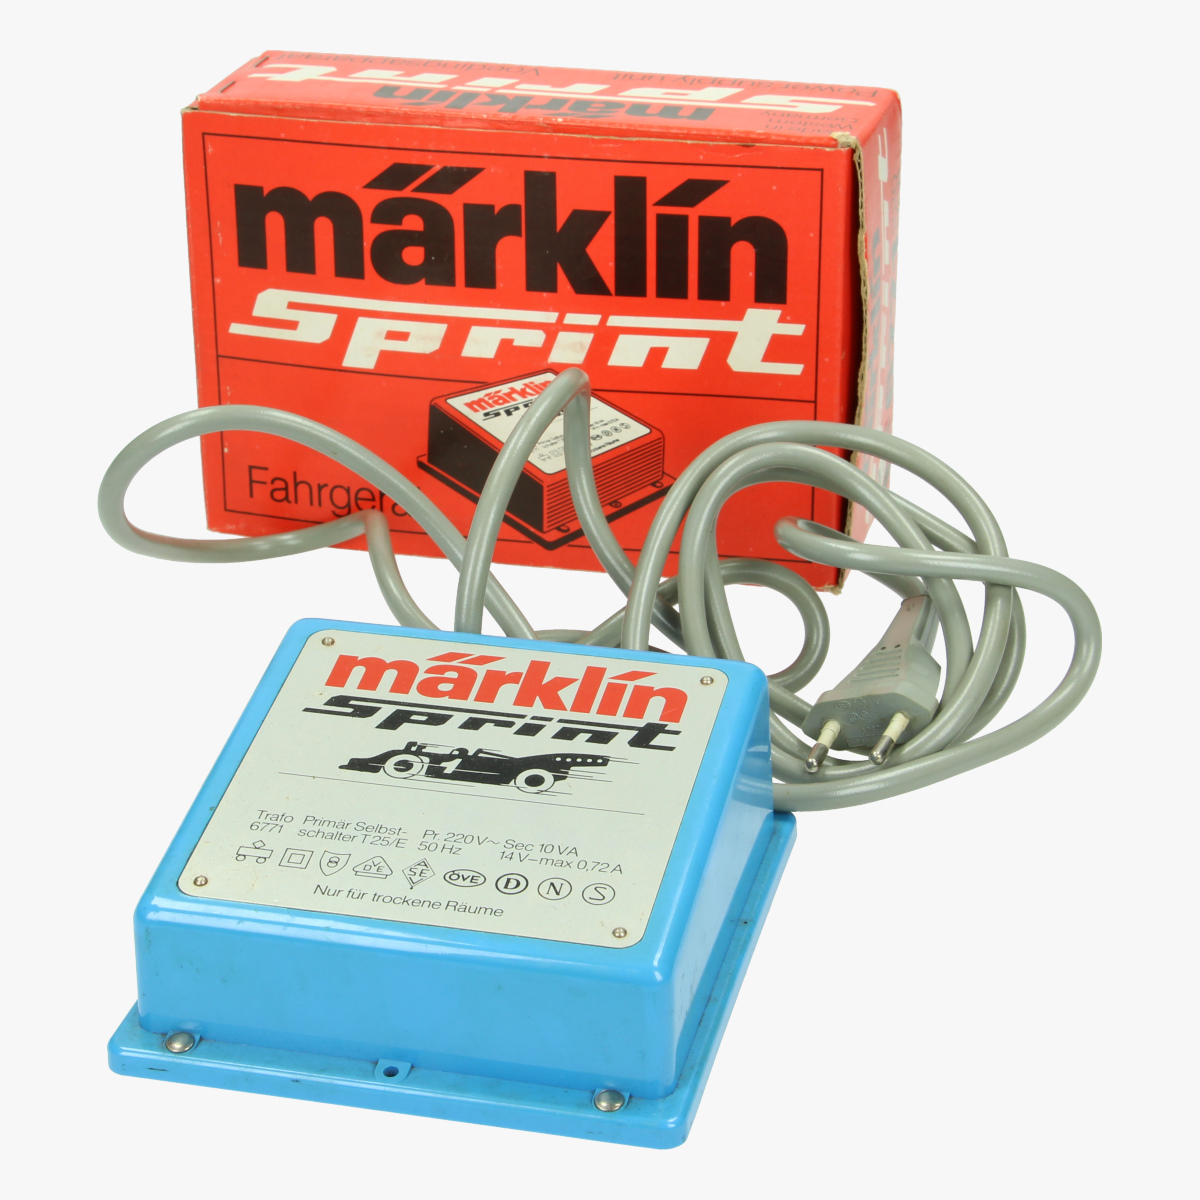 Afbeeldingen van Marklin Sprint. Transformator.Nr.6771.